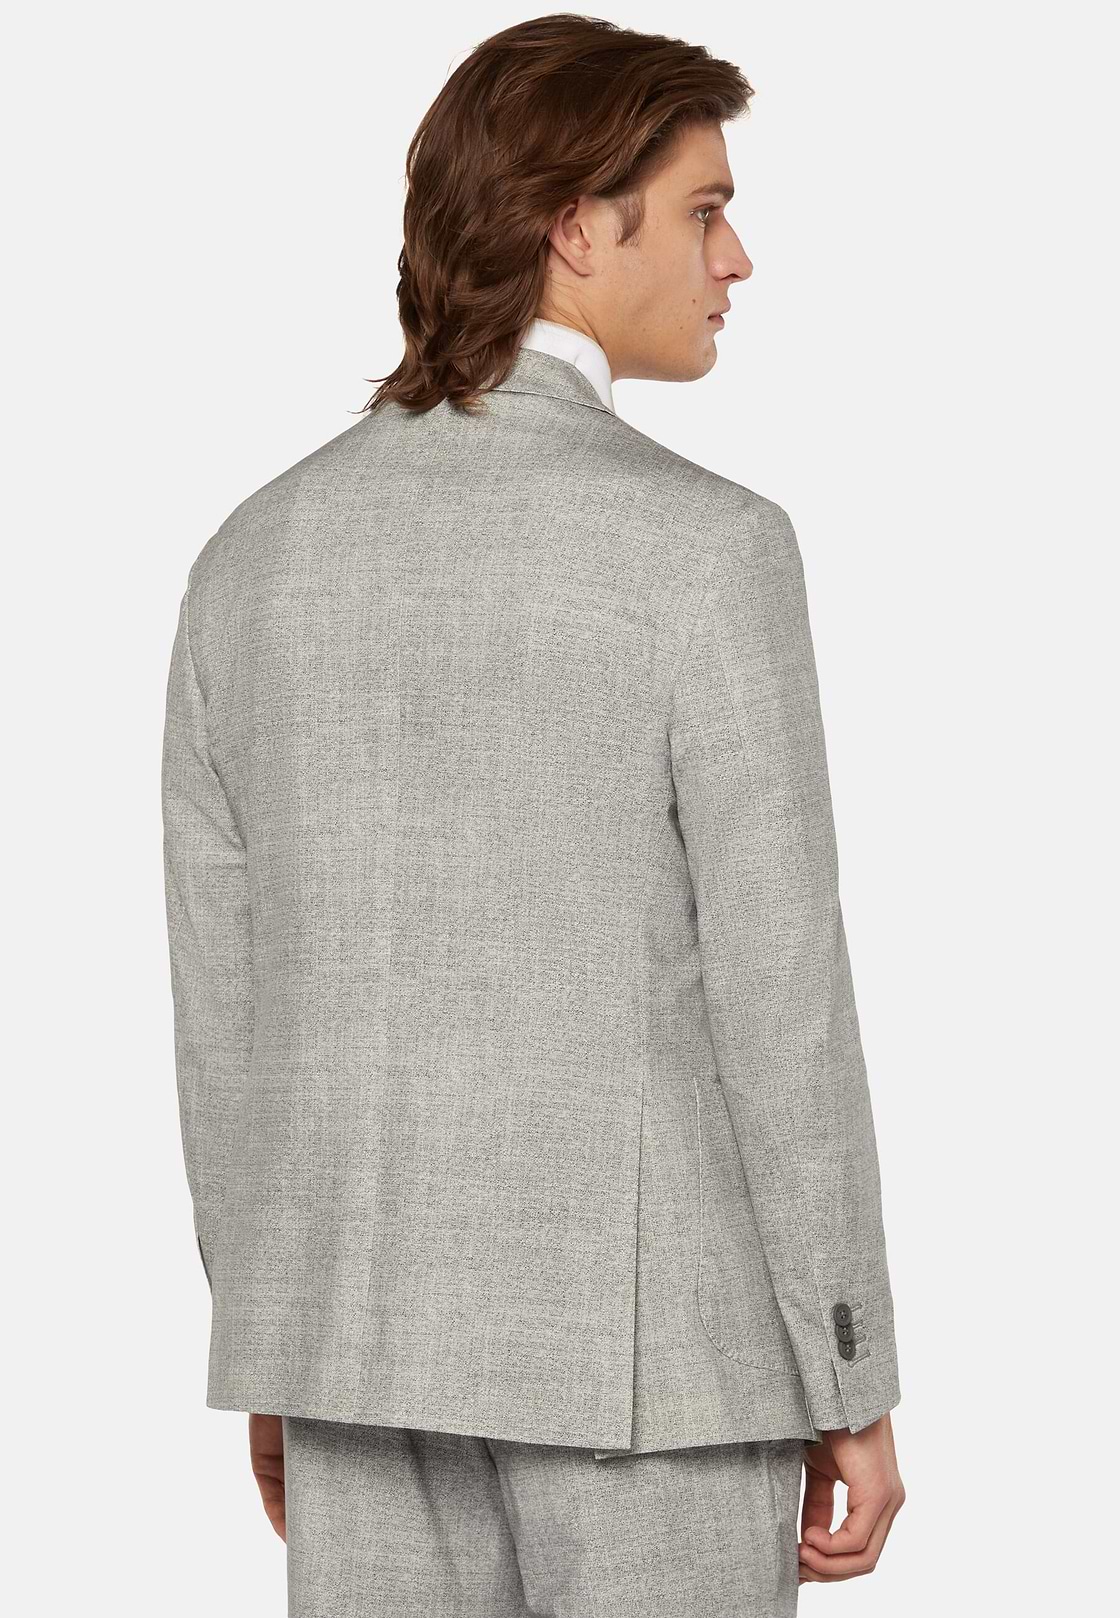 Light Grey Micro Patterned Nylon Jacket, Light grey, hi-res